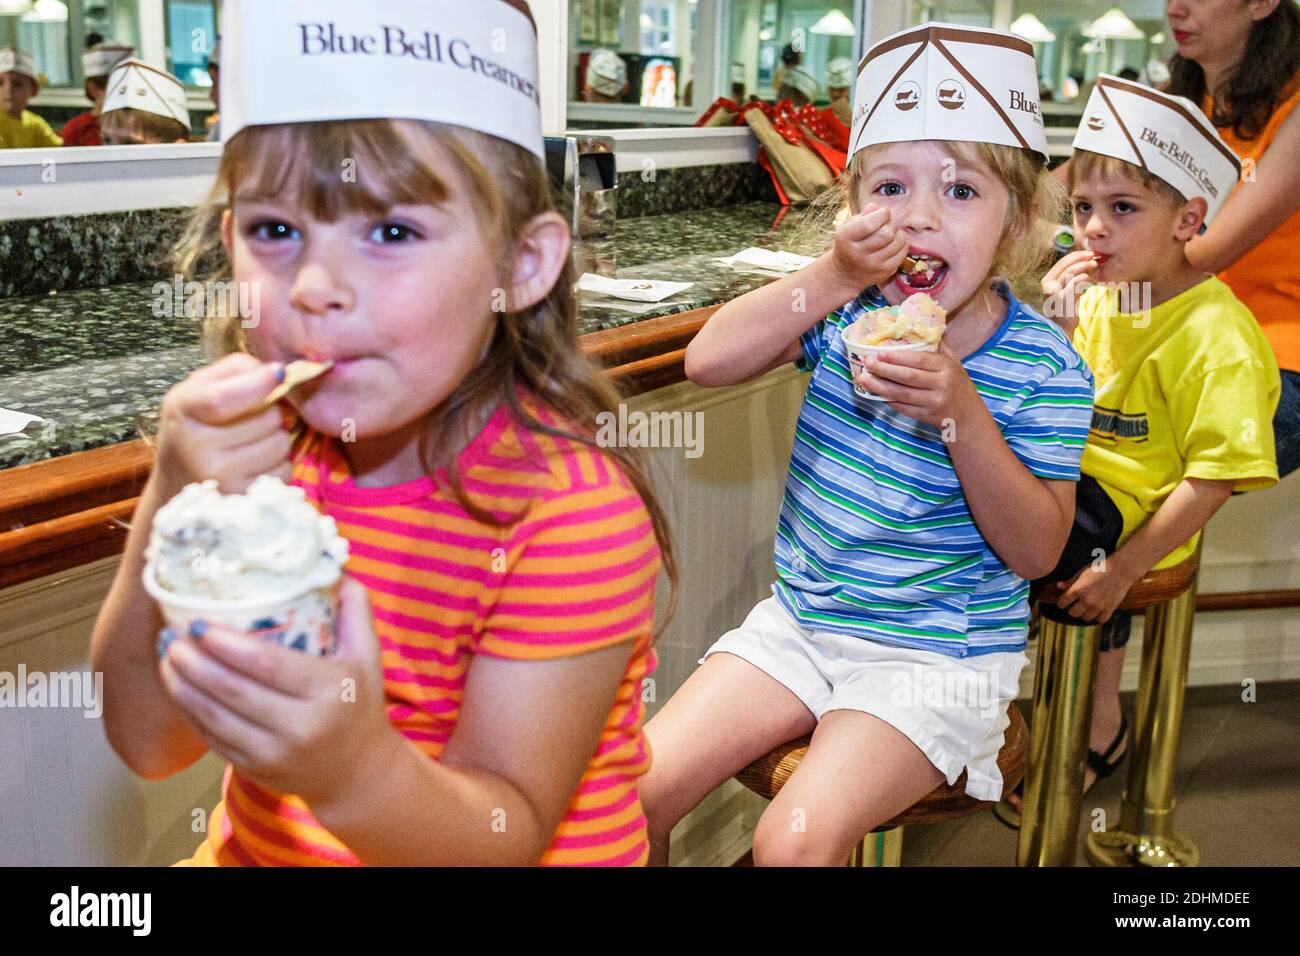 Alabama Sylacauga Blue Bell Creameries ice cream manufacturing plant production,children girls boy eating ice cream tour school field trip,students,we Stock Photo